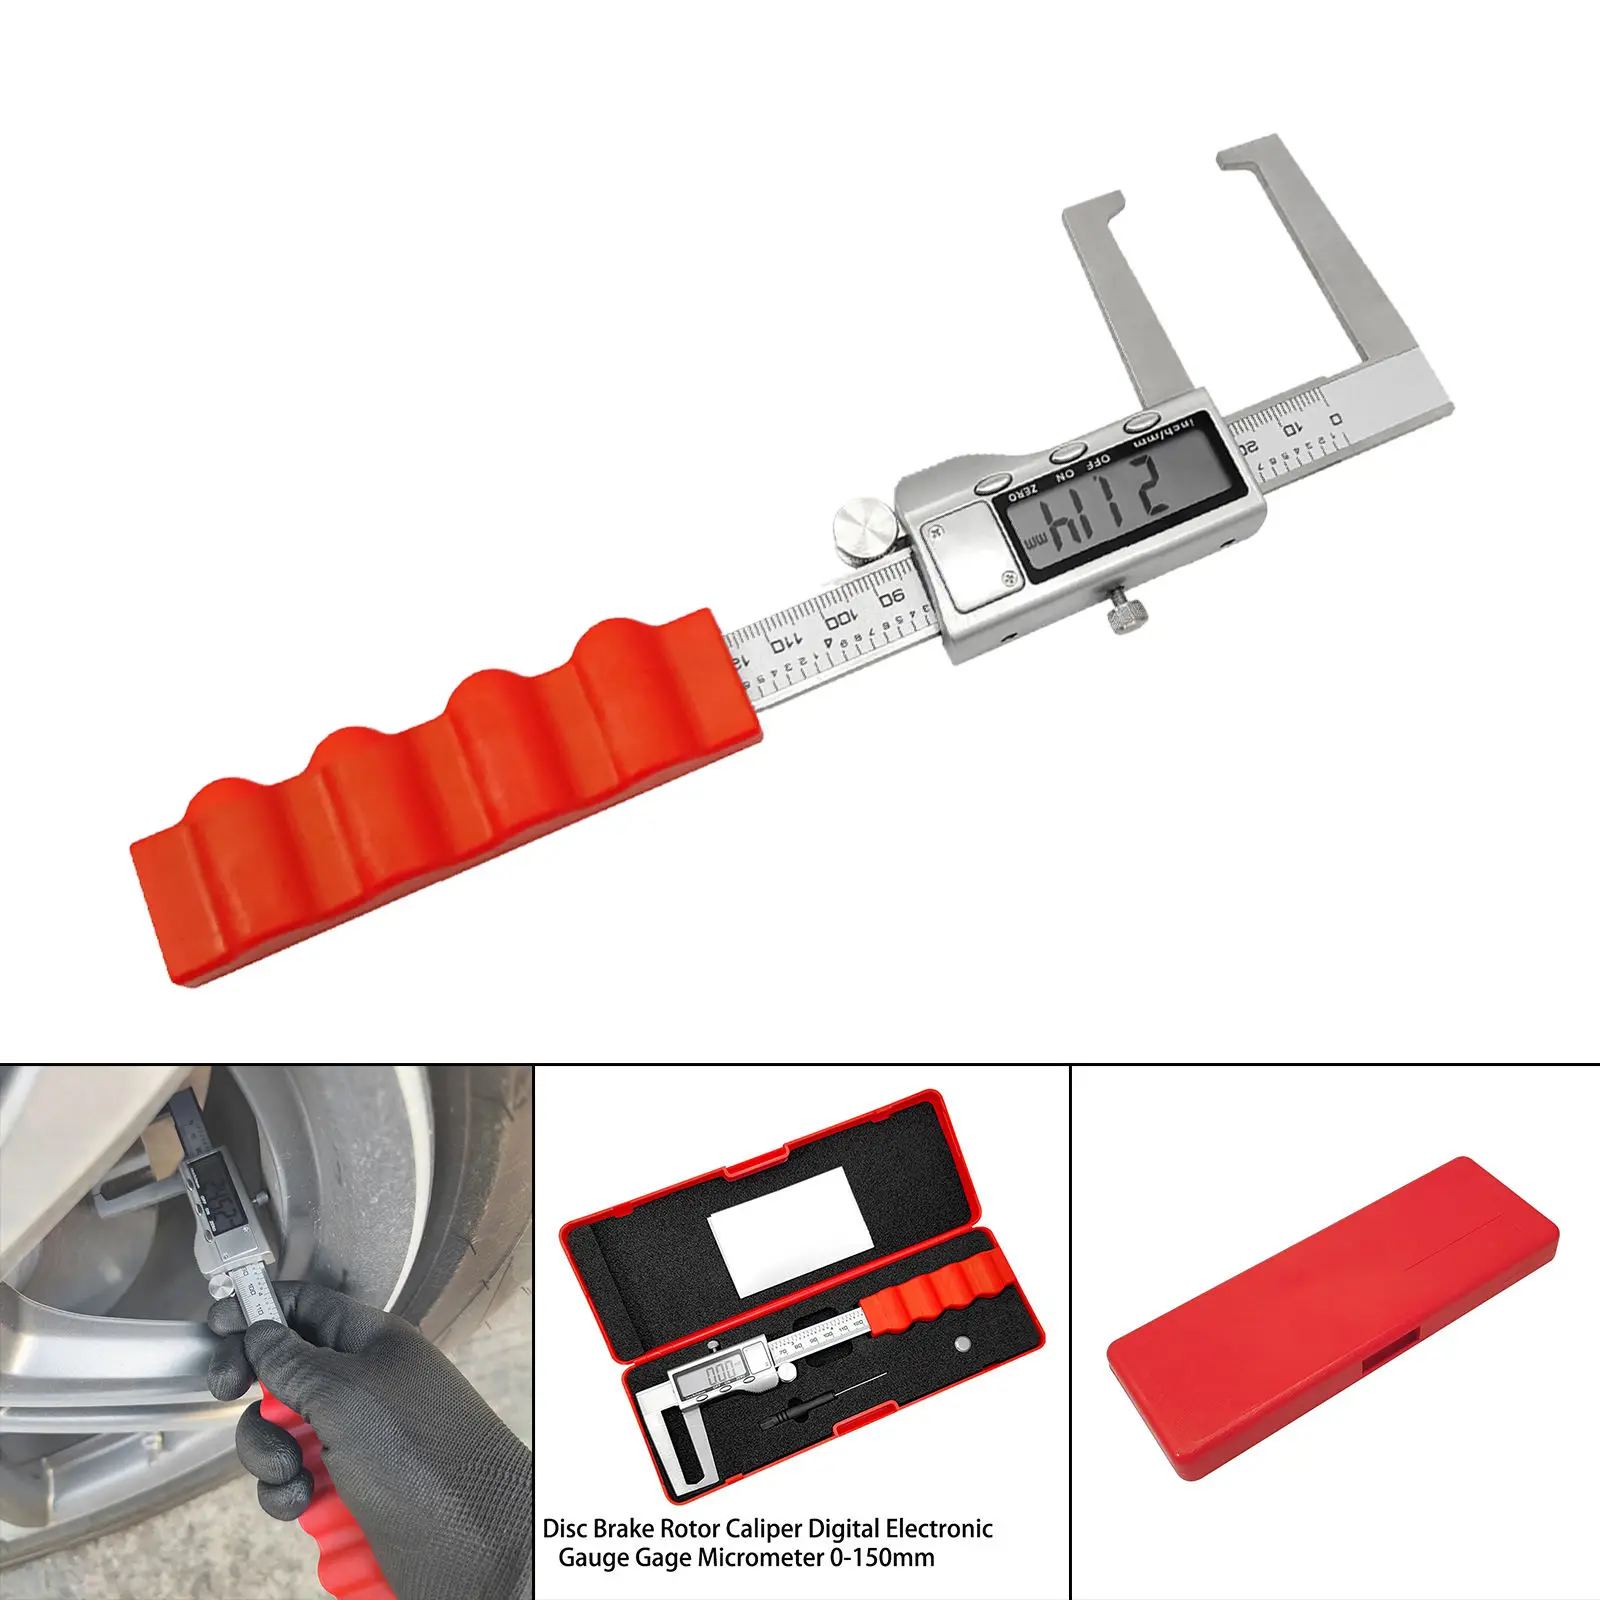 Brake Discs Vernier Caliper Digital Electronic Gauge Measuring Tool Micrometer 0-150mm